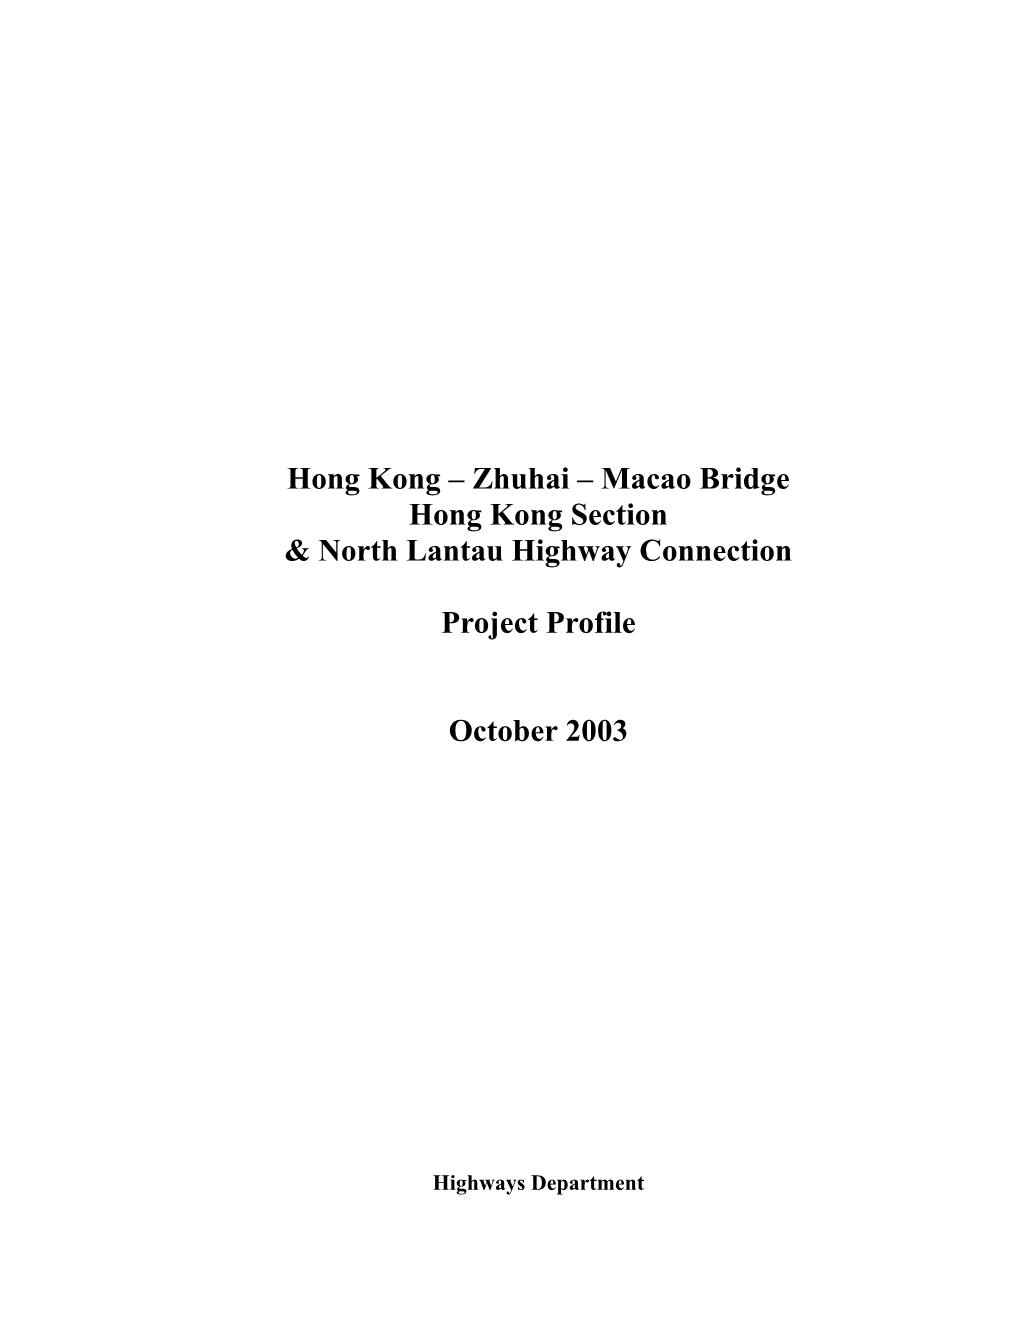 Zhuhai – Macao Bridge Hong Kong Section & North Lantau Highway